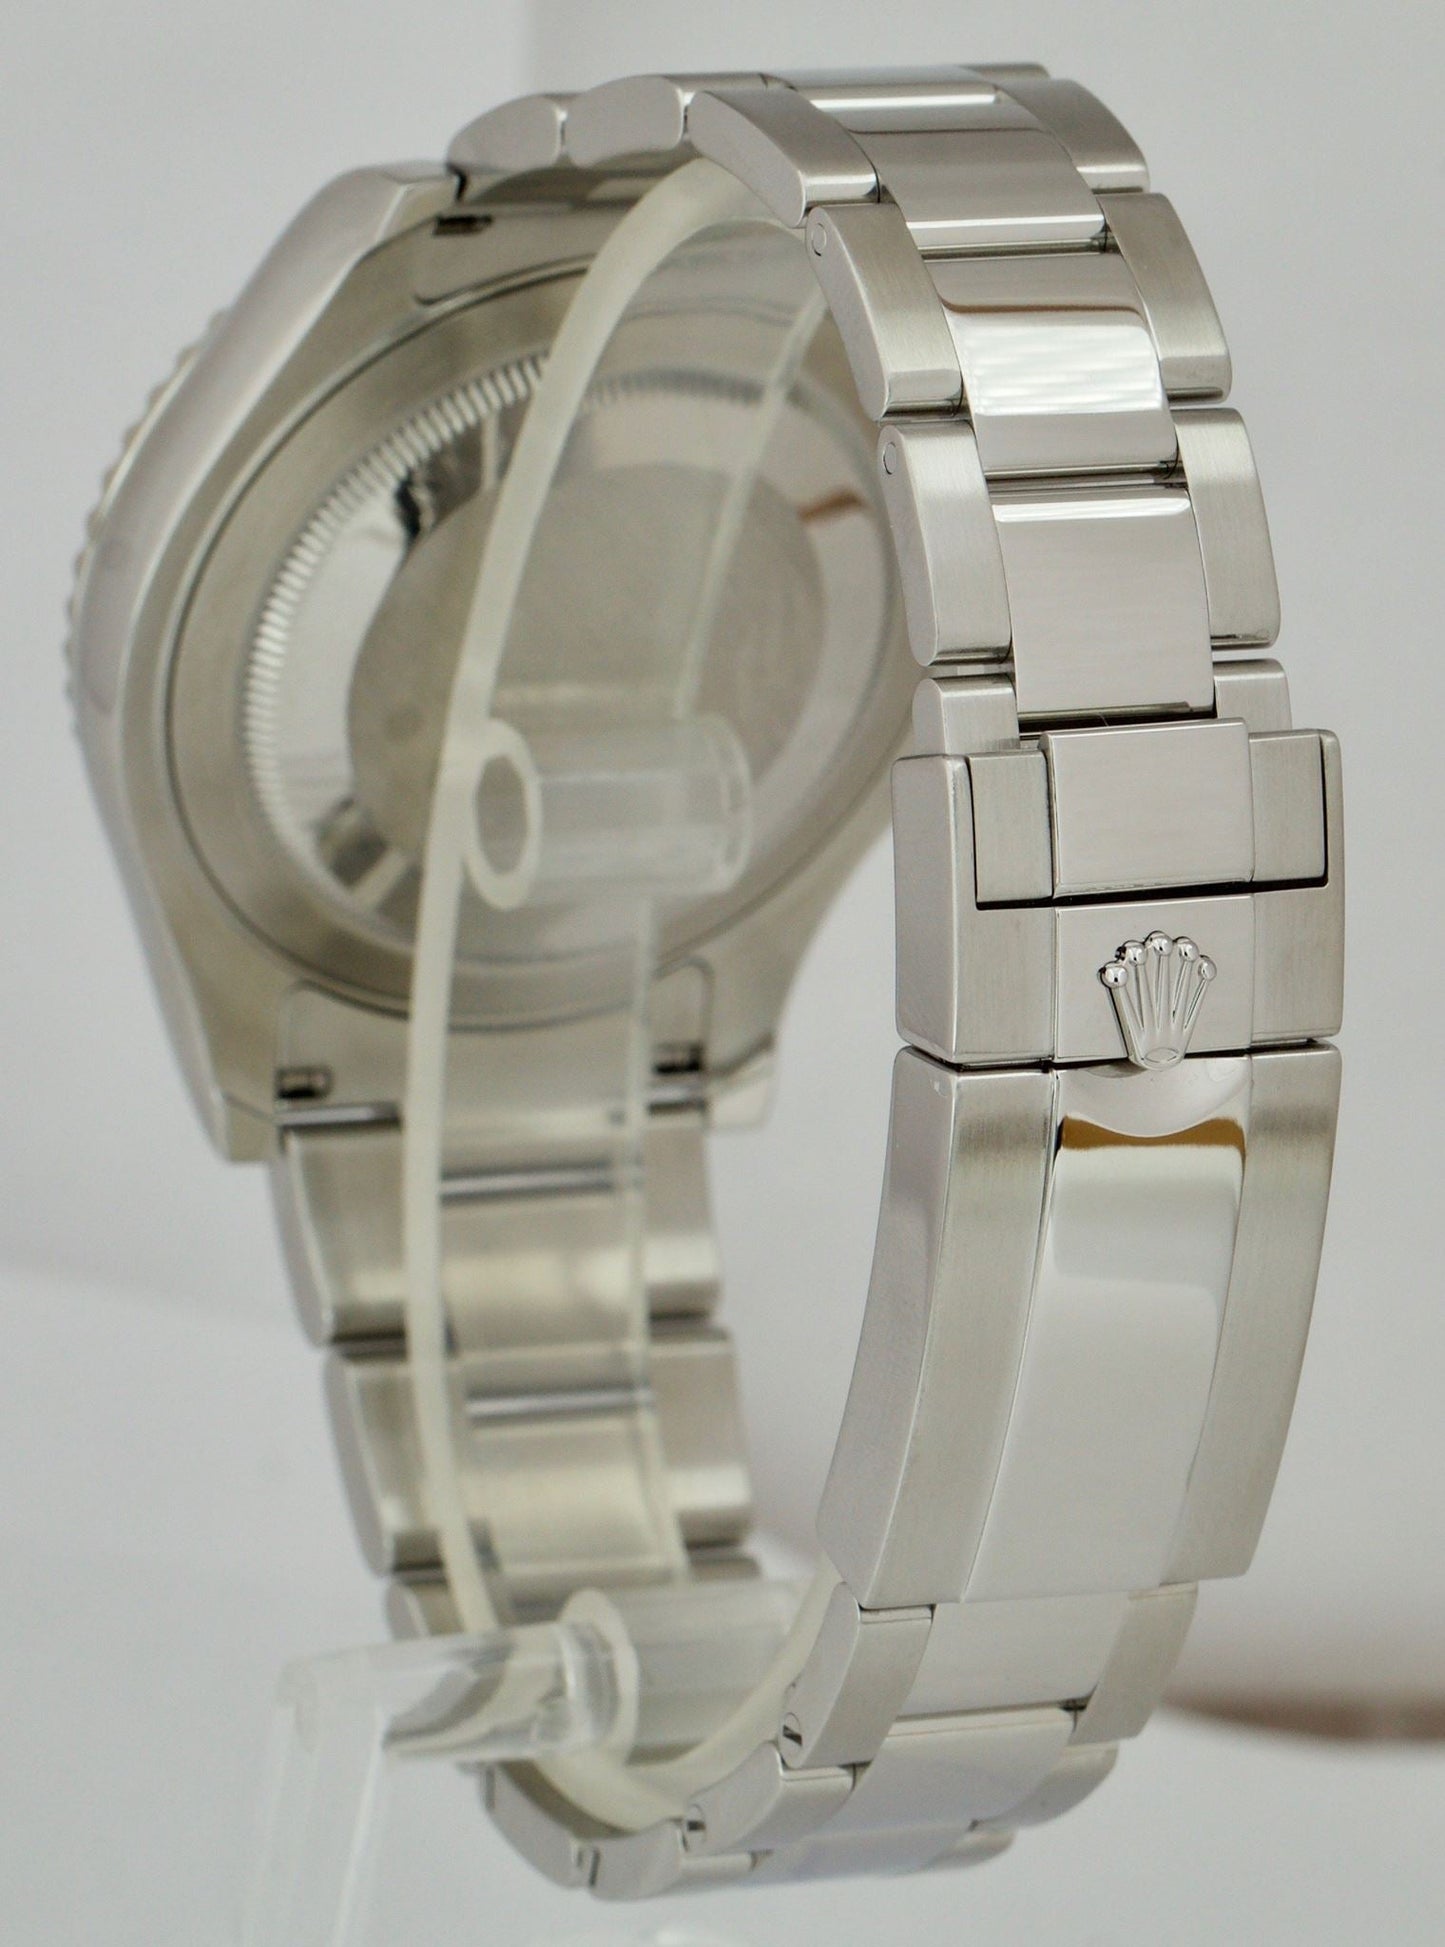 Rolex Yacht-Master 40mm NEW BUCKLE 116622 Stainless Steel Platinum Silver Watch